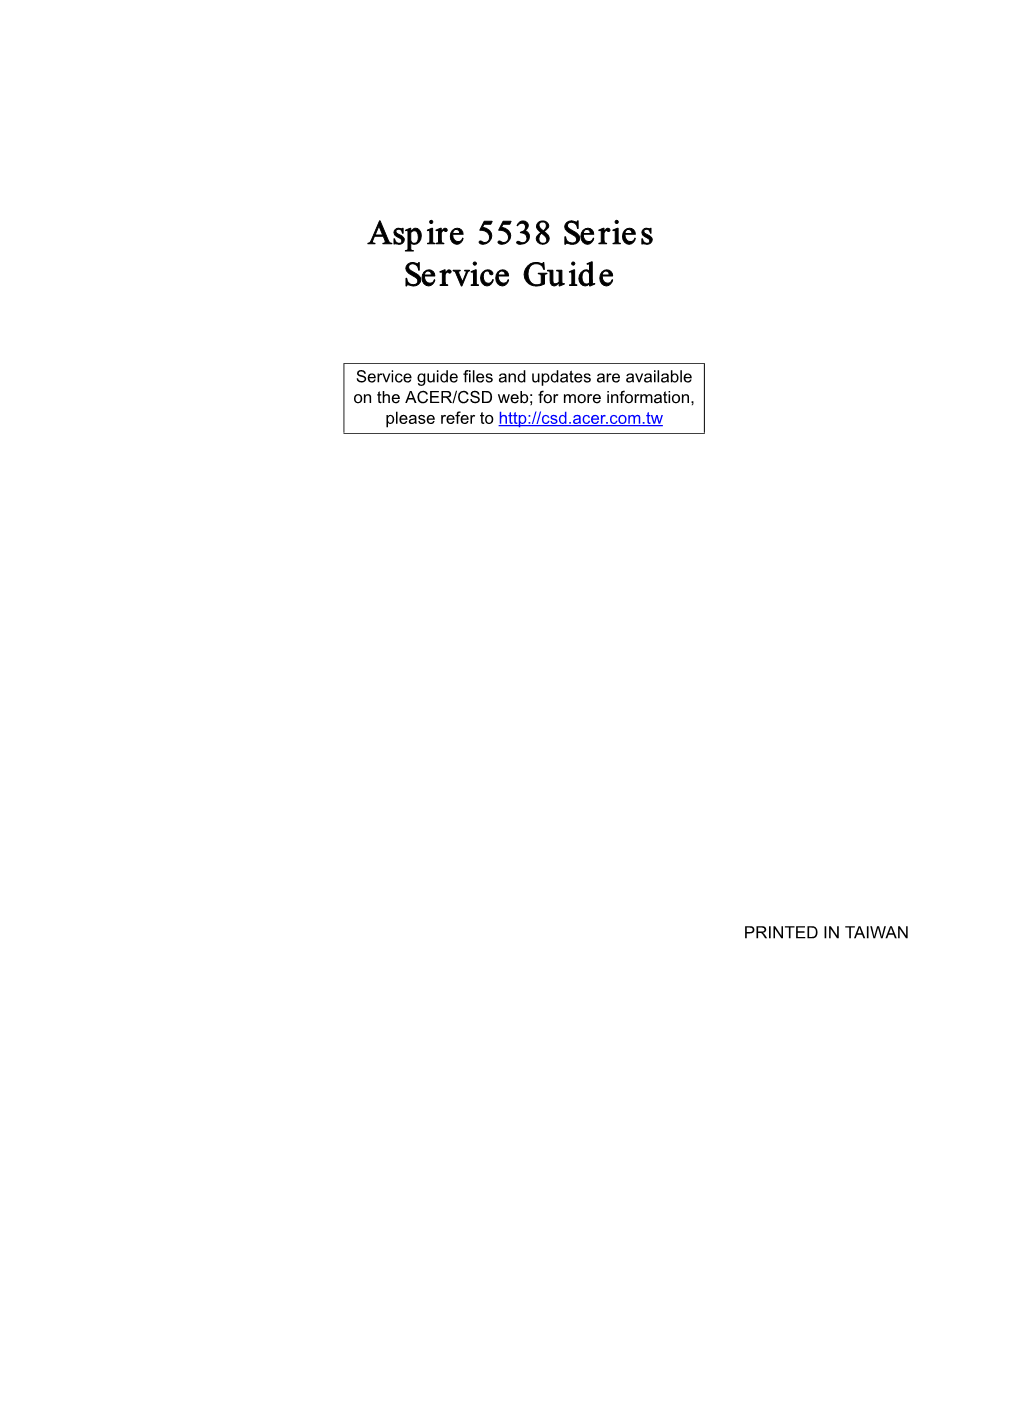 Aspire 5538 Series Service Guide